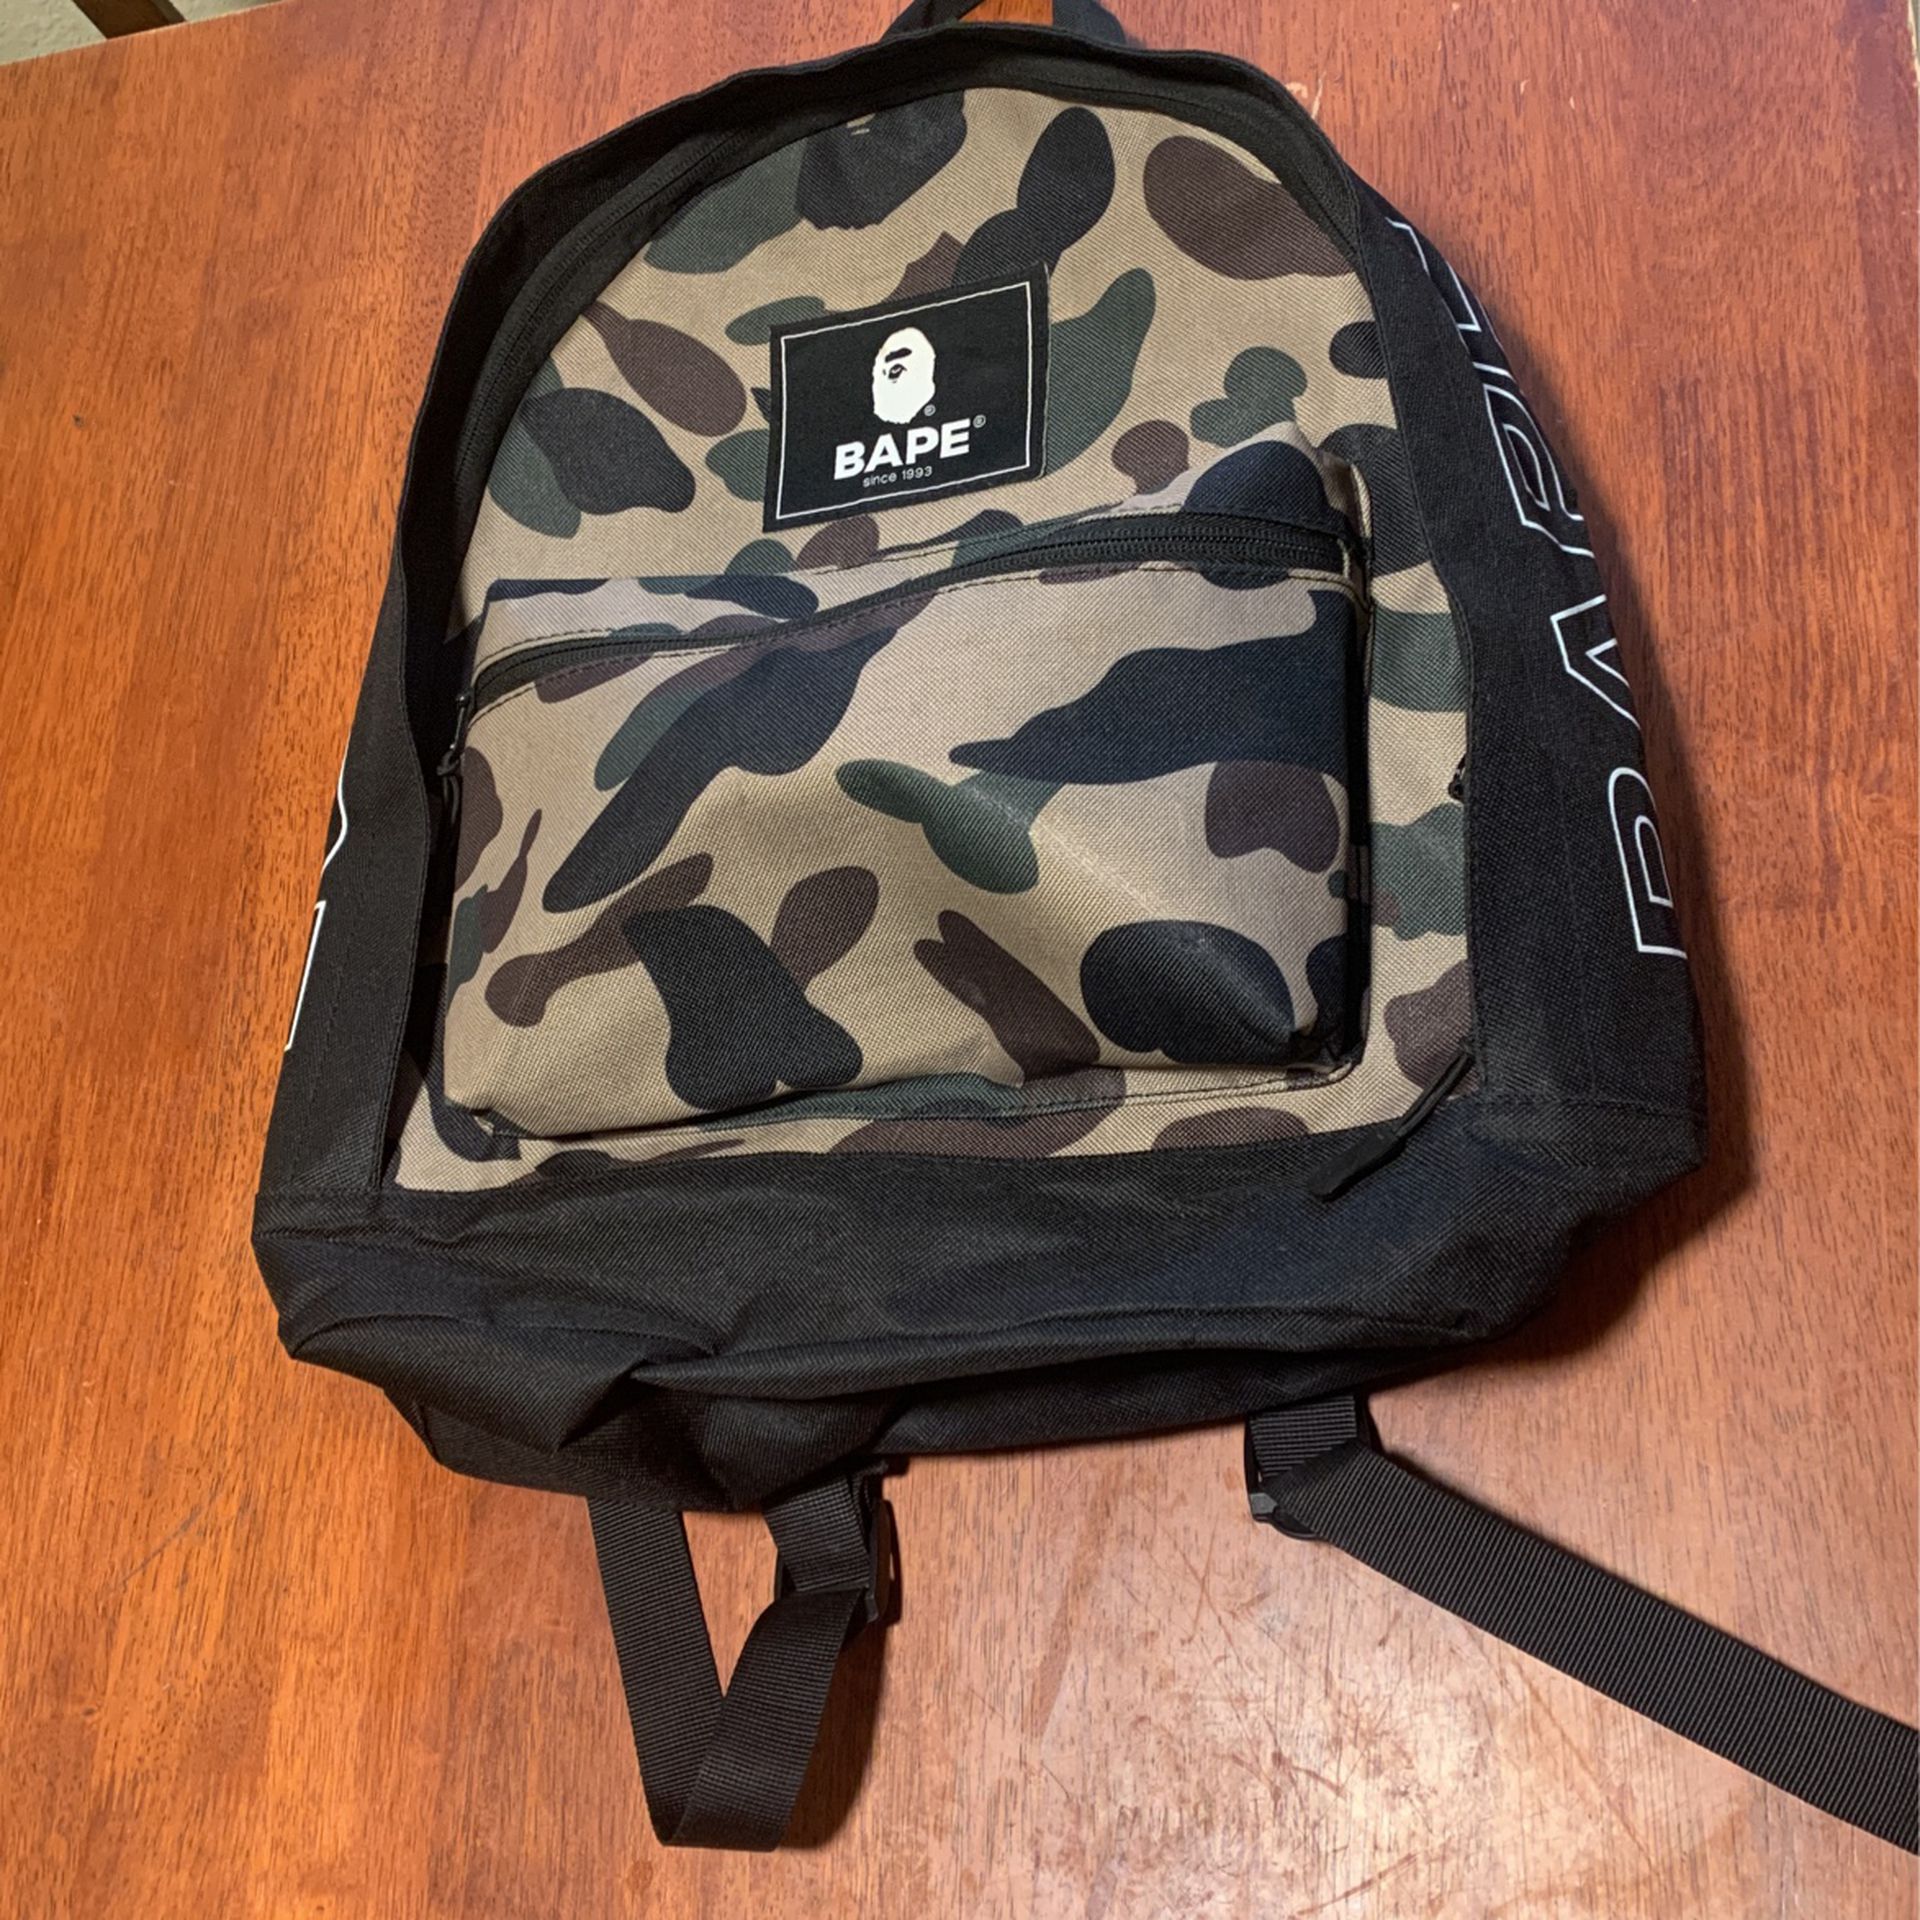 Bape Backpack 